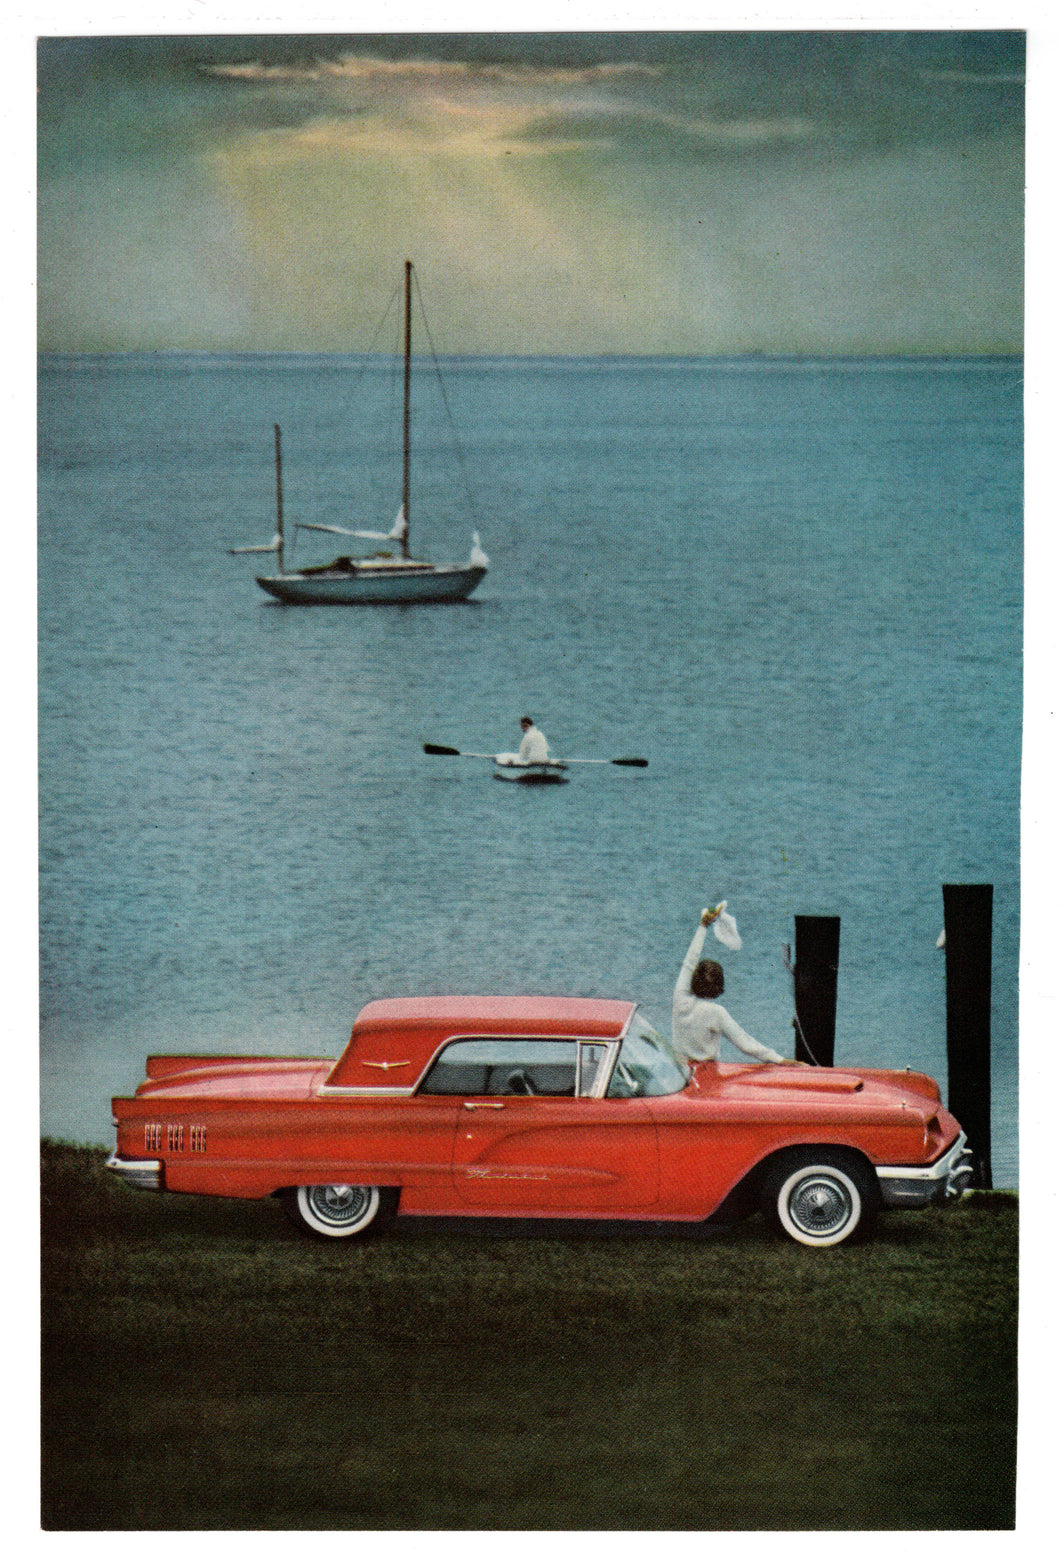 Thunderbird Vintage Ad - (Hard Top) # 482 - Ford Motor Company 1960's